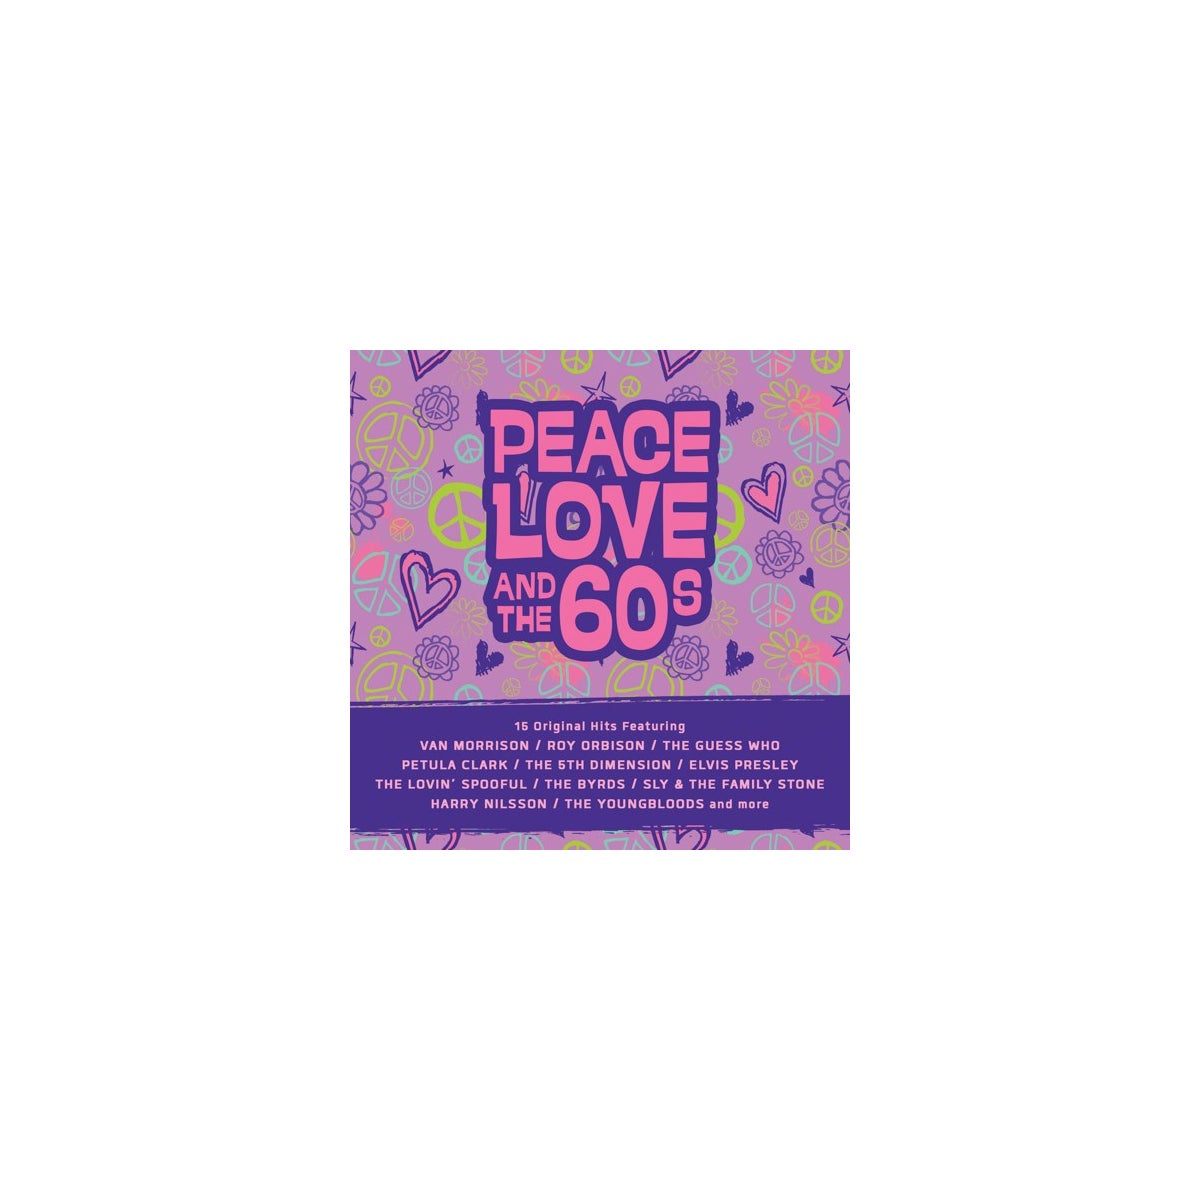 PEACE, LOVE, & THE 60'S